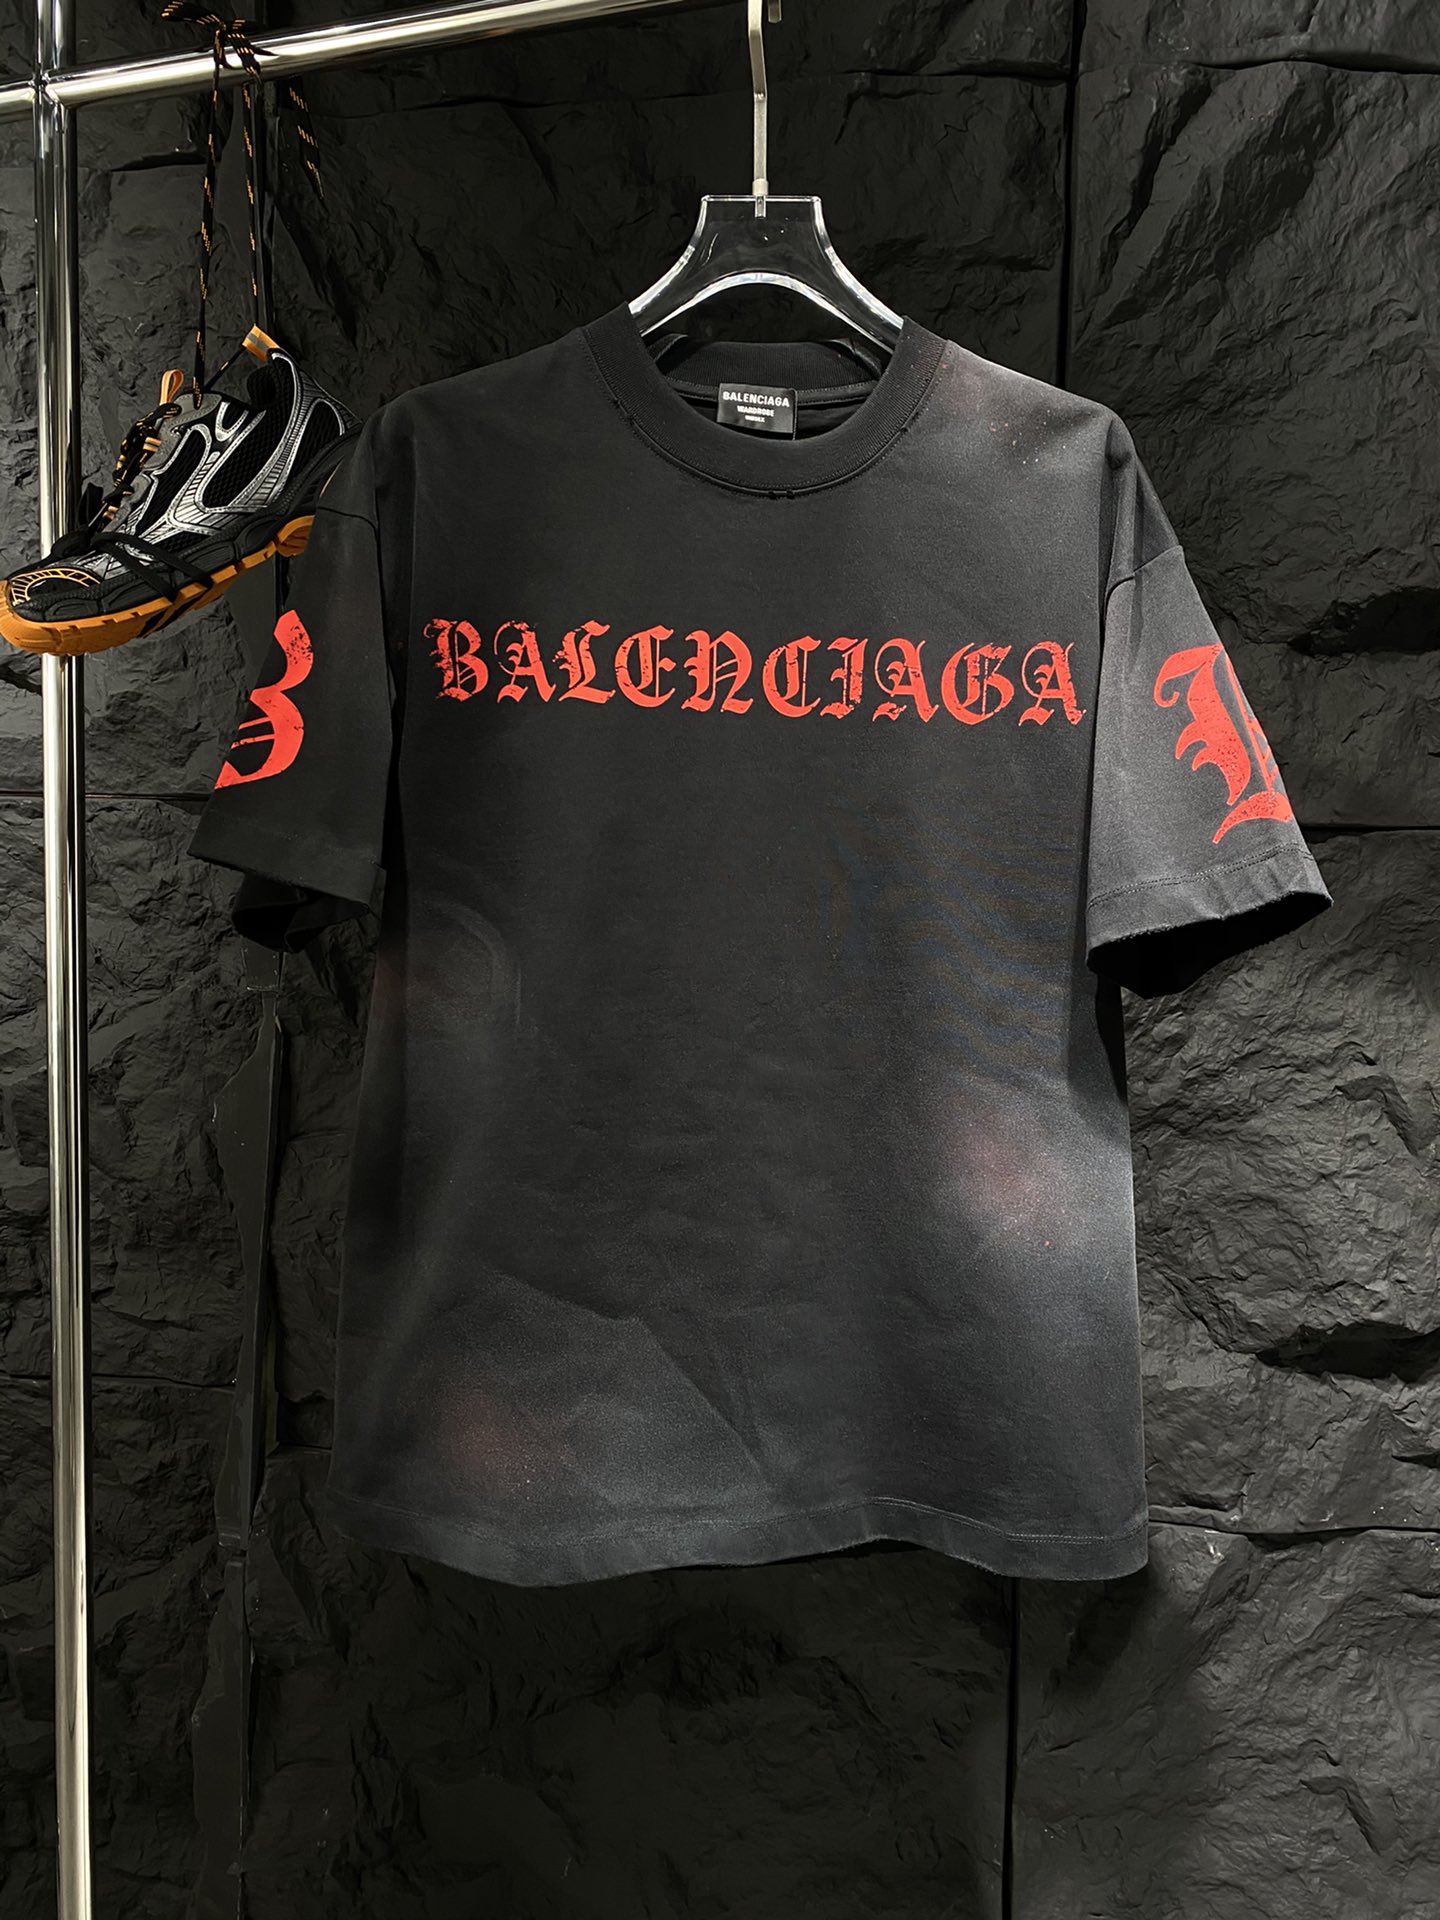 Balenciaga AAA
 Kleding T-Shirt Afdrukken Unisex Katoen Lentecollectie